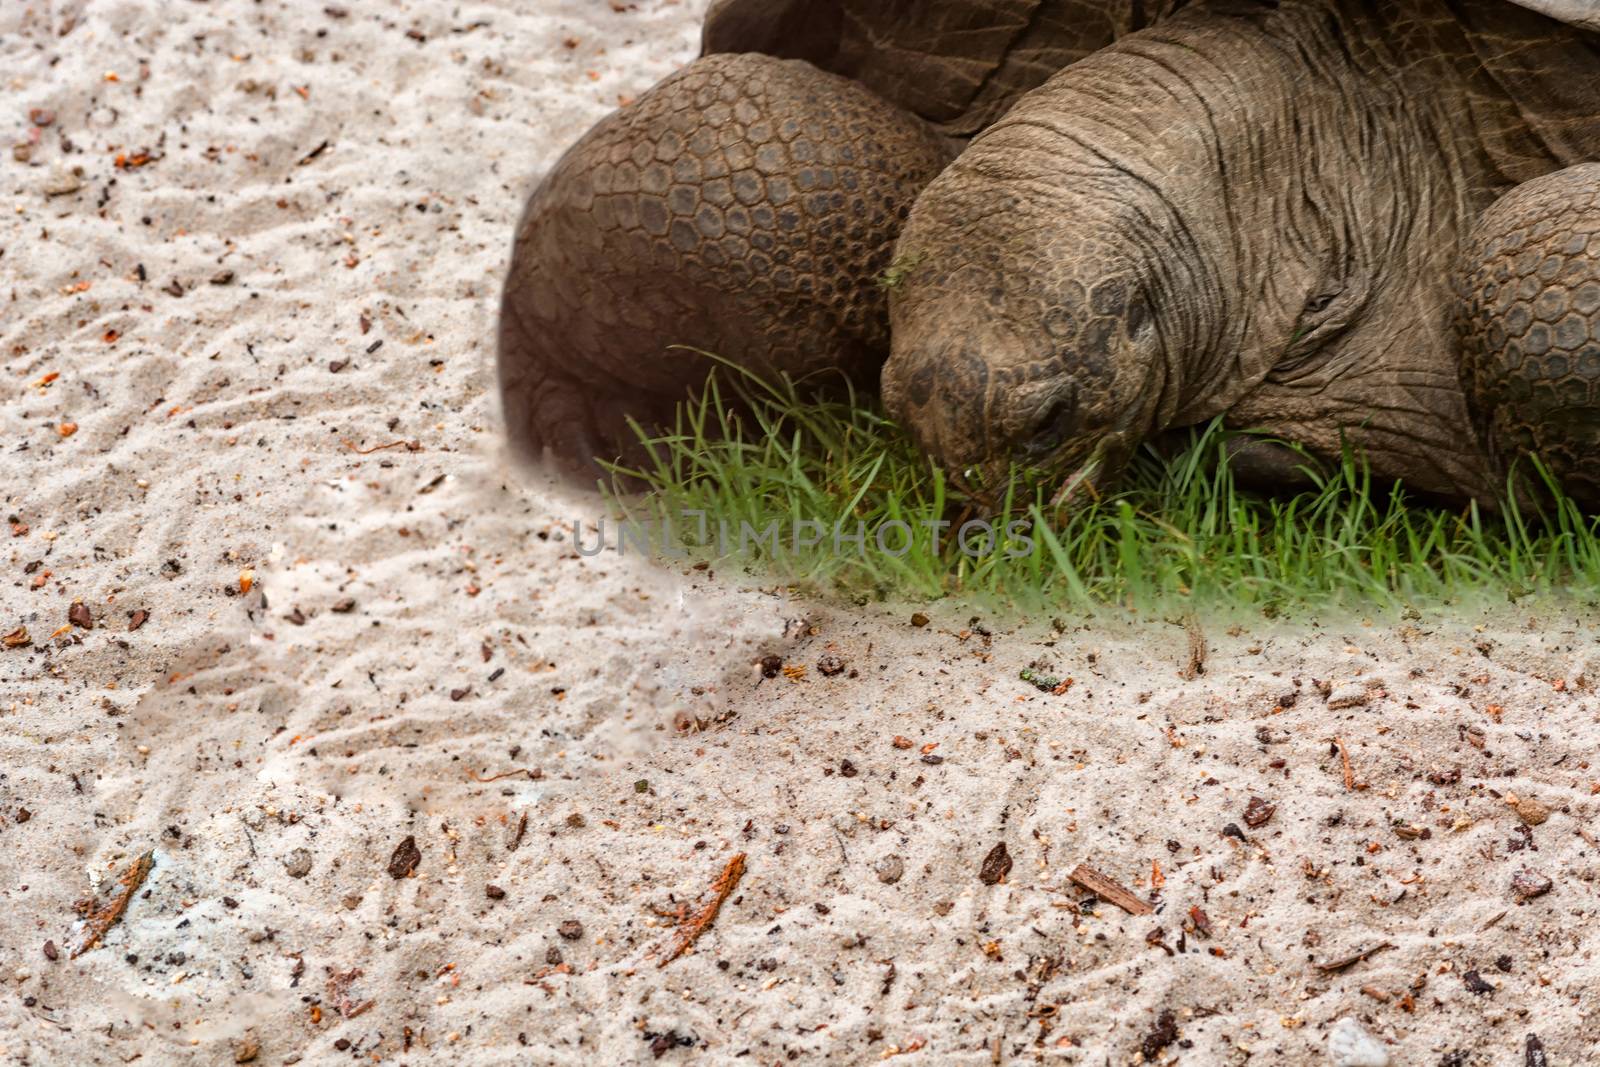  Aldabra Seychelles giant tortoise by JFsPic